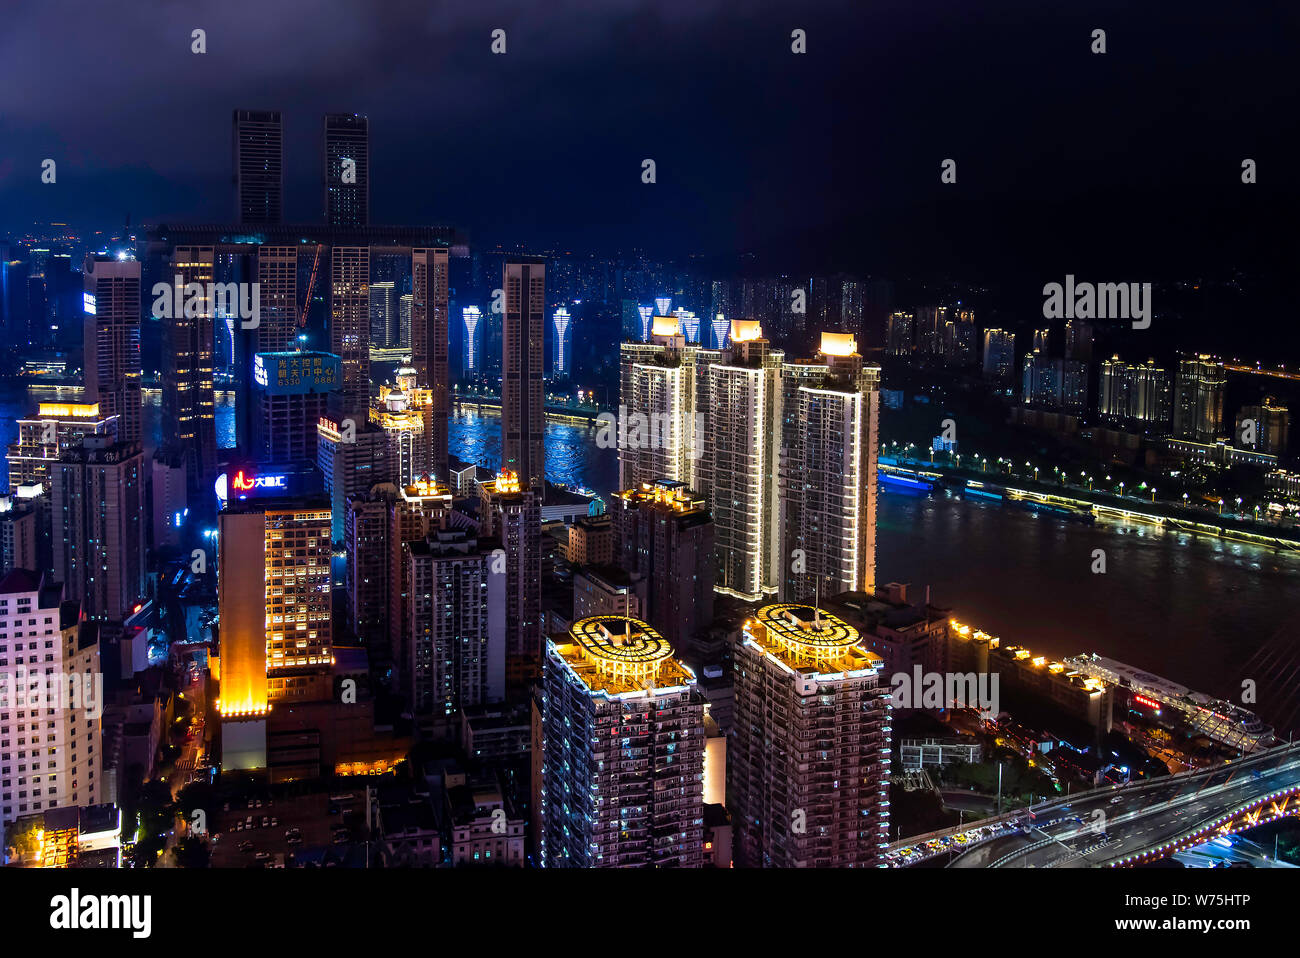 Chongqing, China - July 23, 2019: Urban skyline and skyscrapers of Chongqing municipality in China Stock Photo